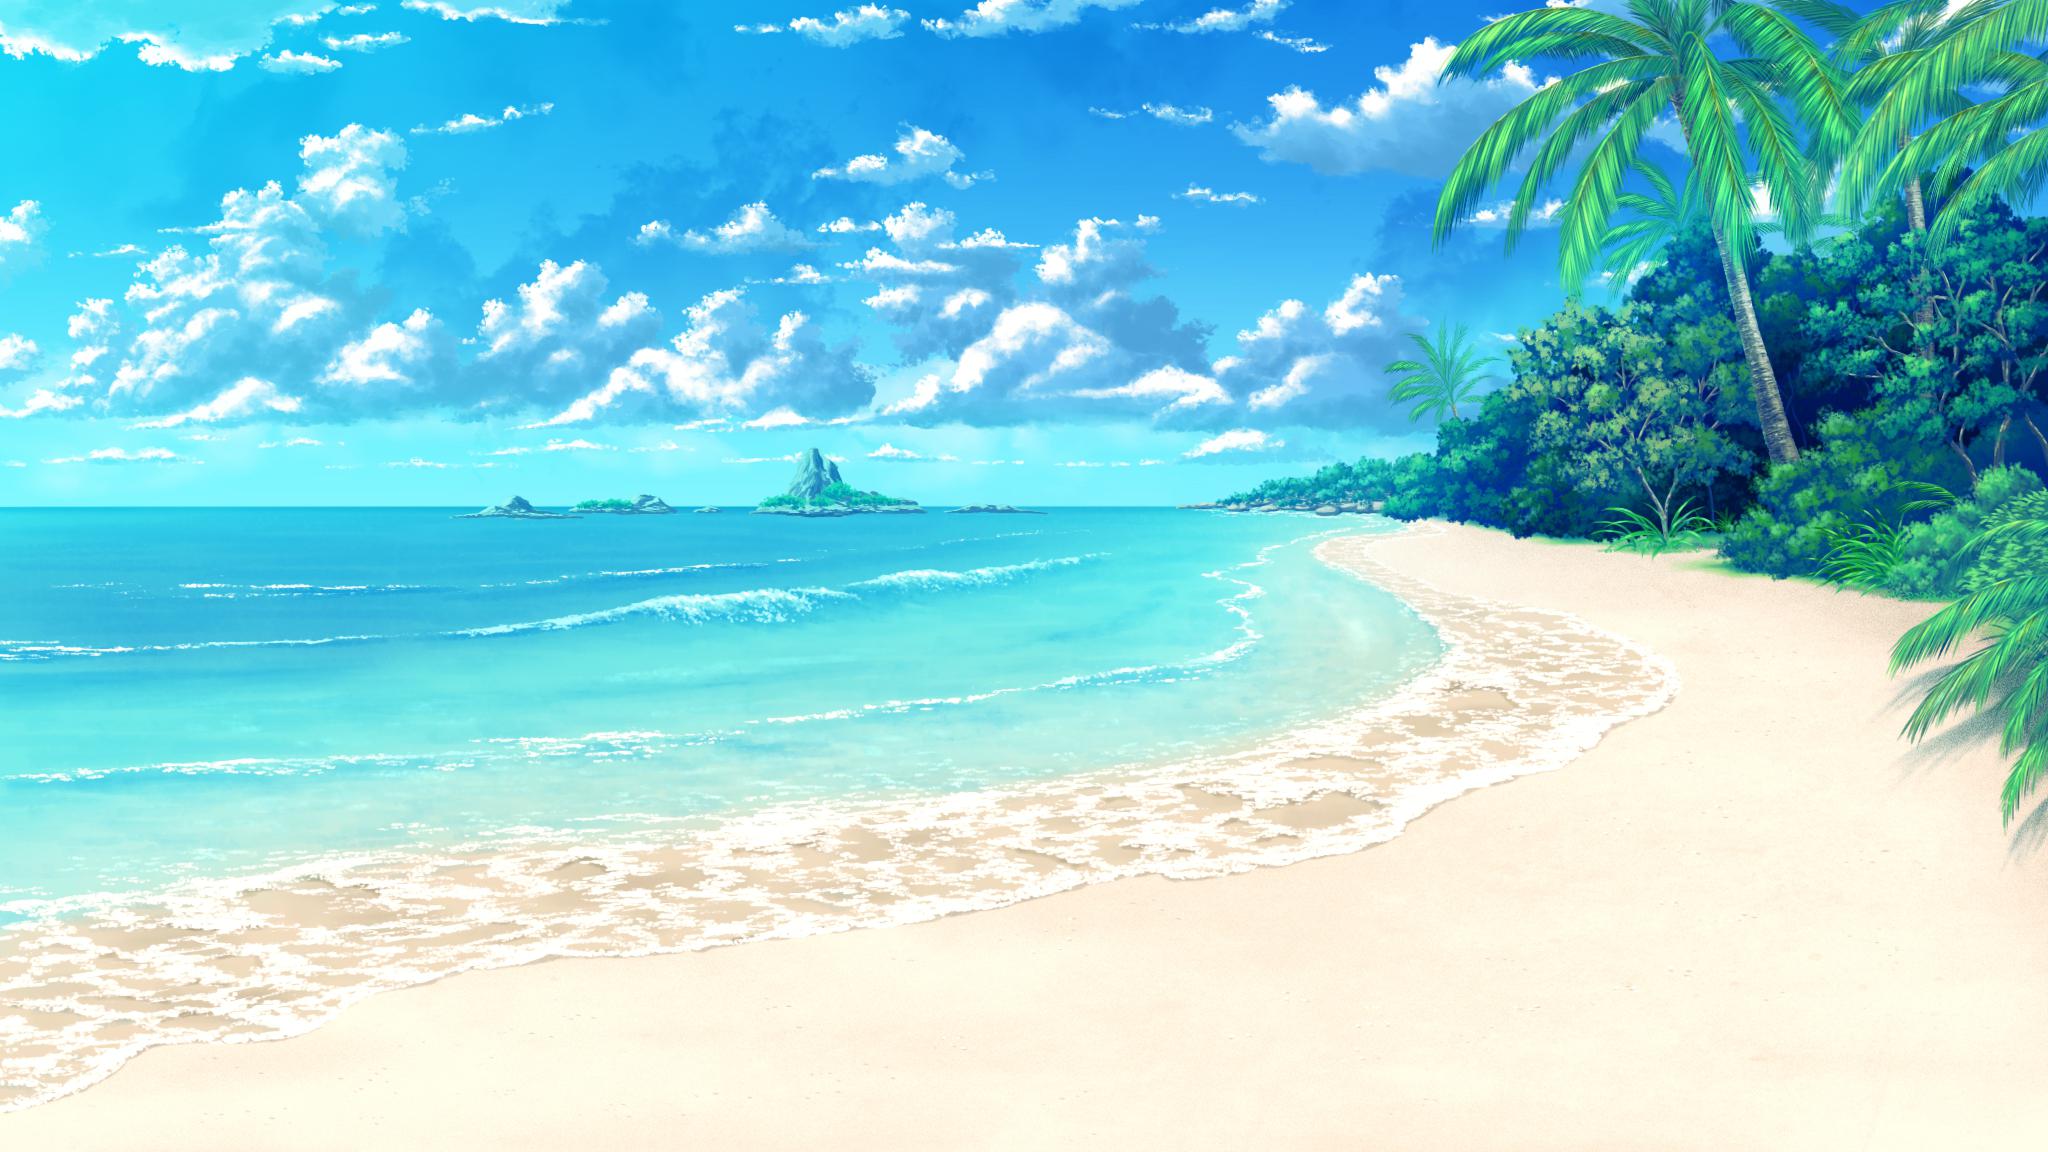 48+] Anime Beach Wallpapers - WallpaperSafari